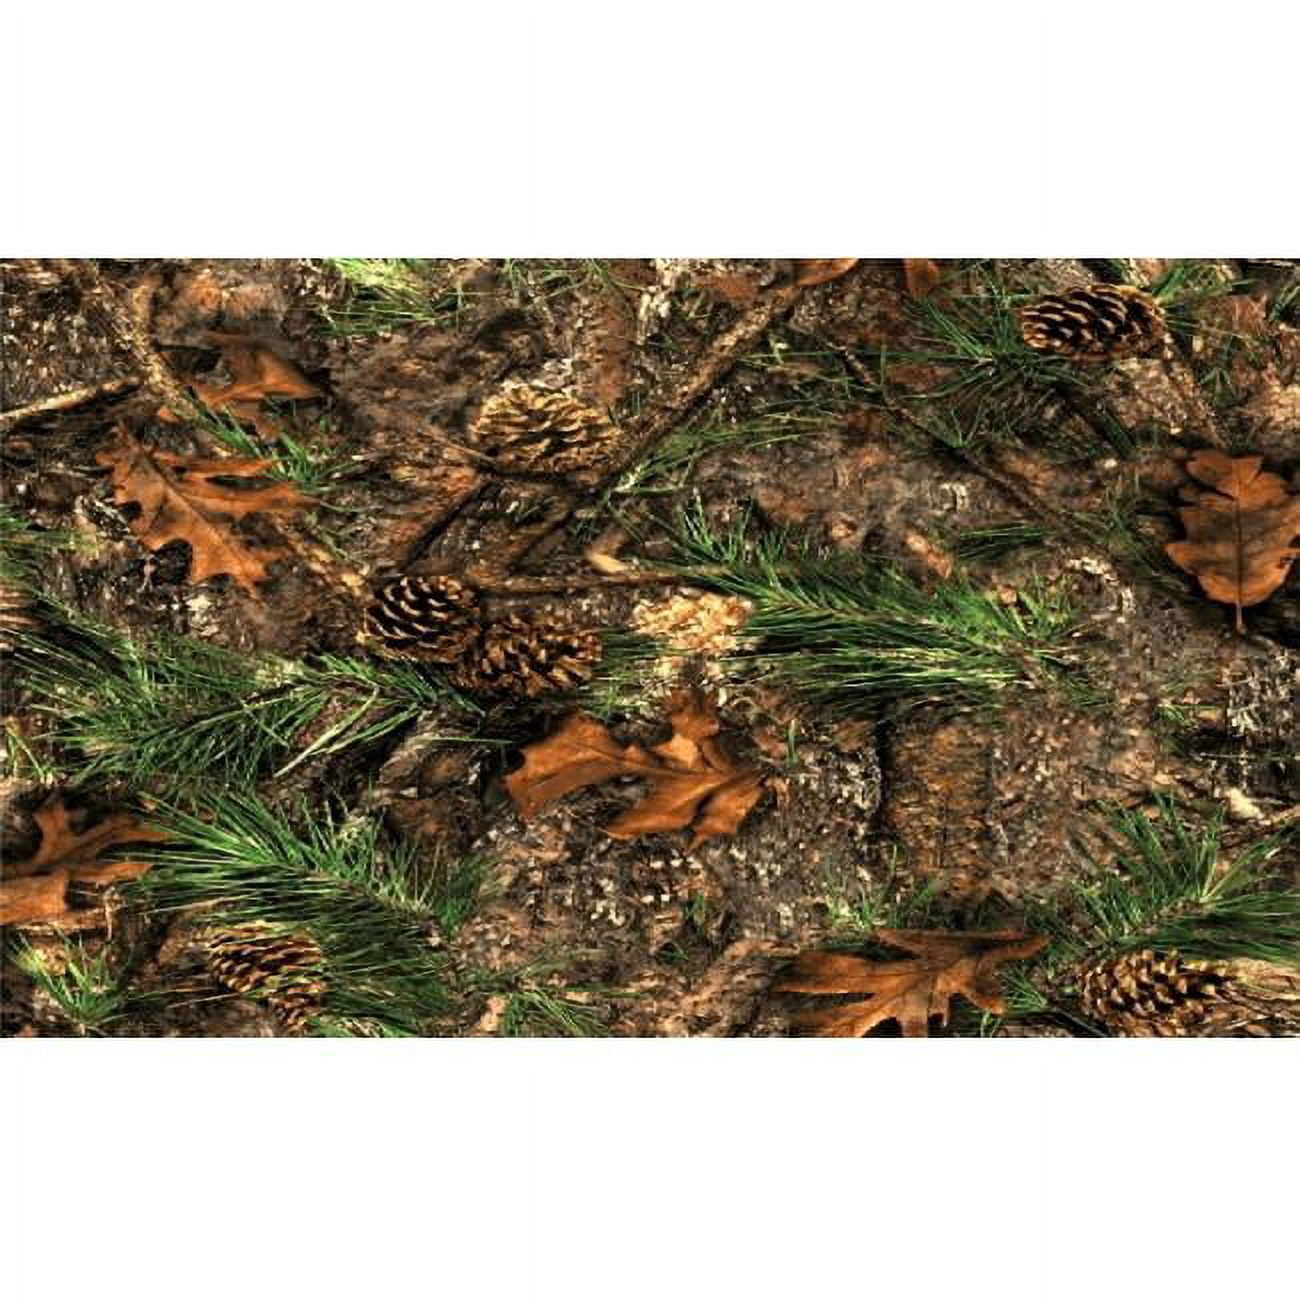 Awv049 Mixed Pine 18 X 30 In. Doormat Rug - Brown, Brown & Tan